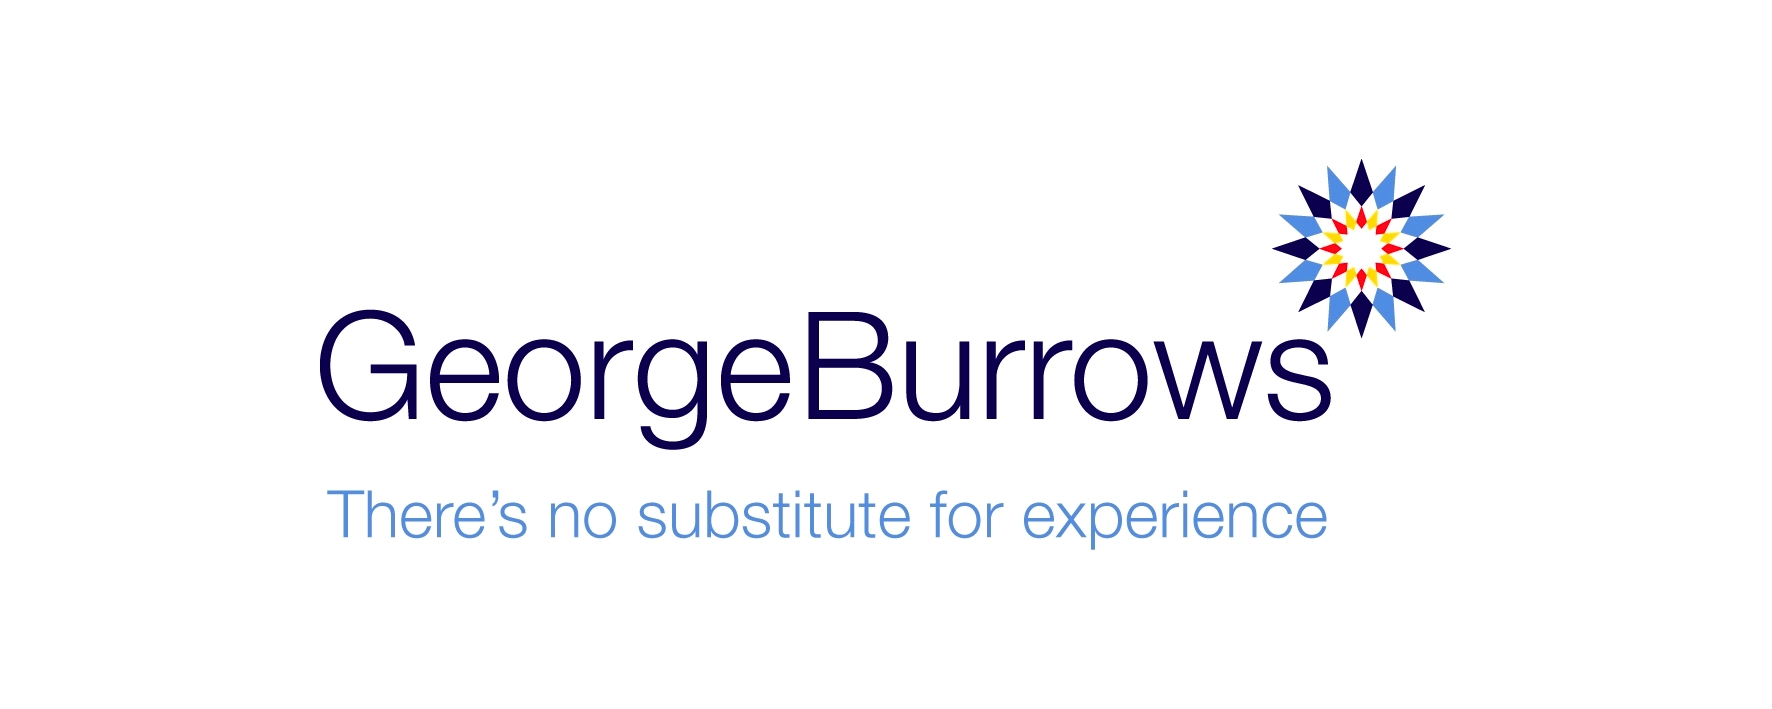 George Burrows